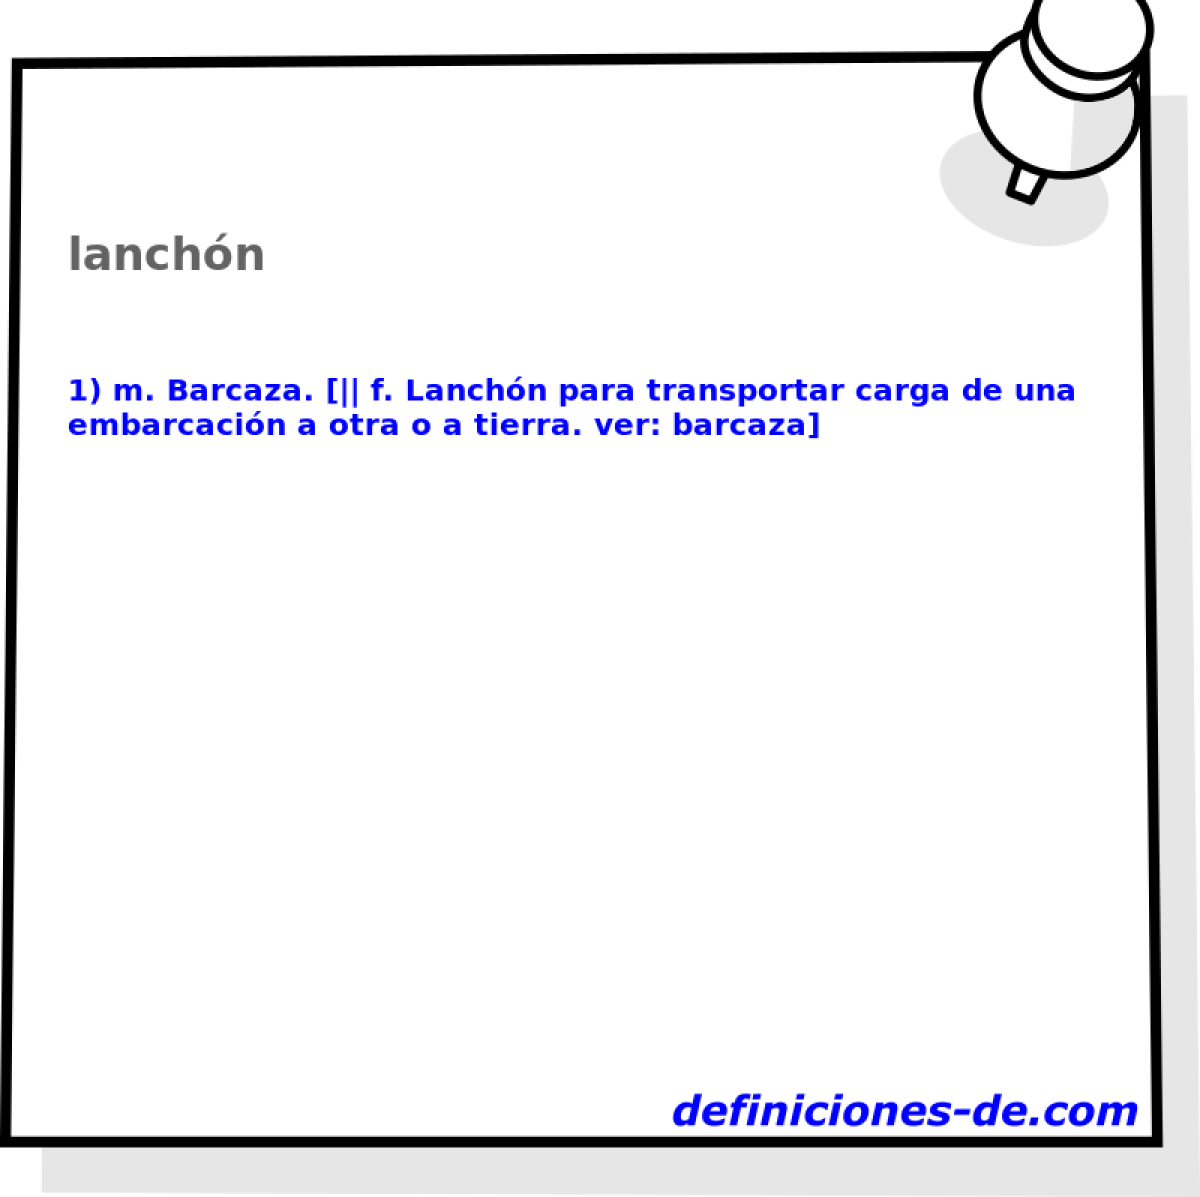 lanchn 